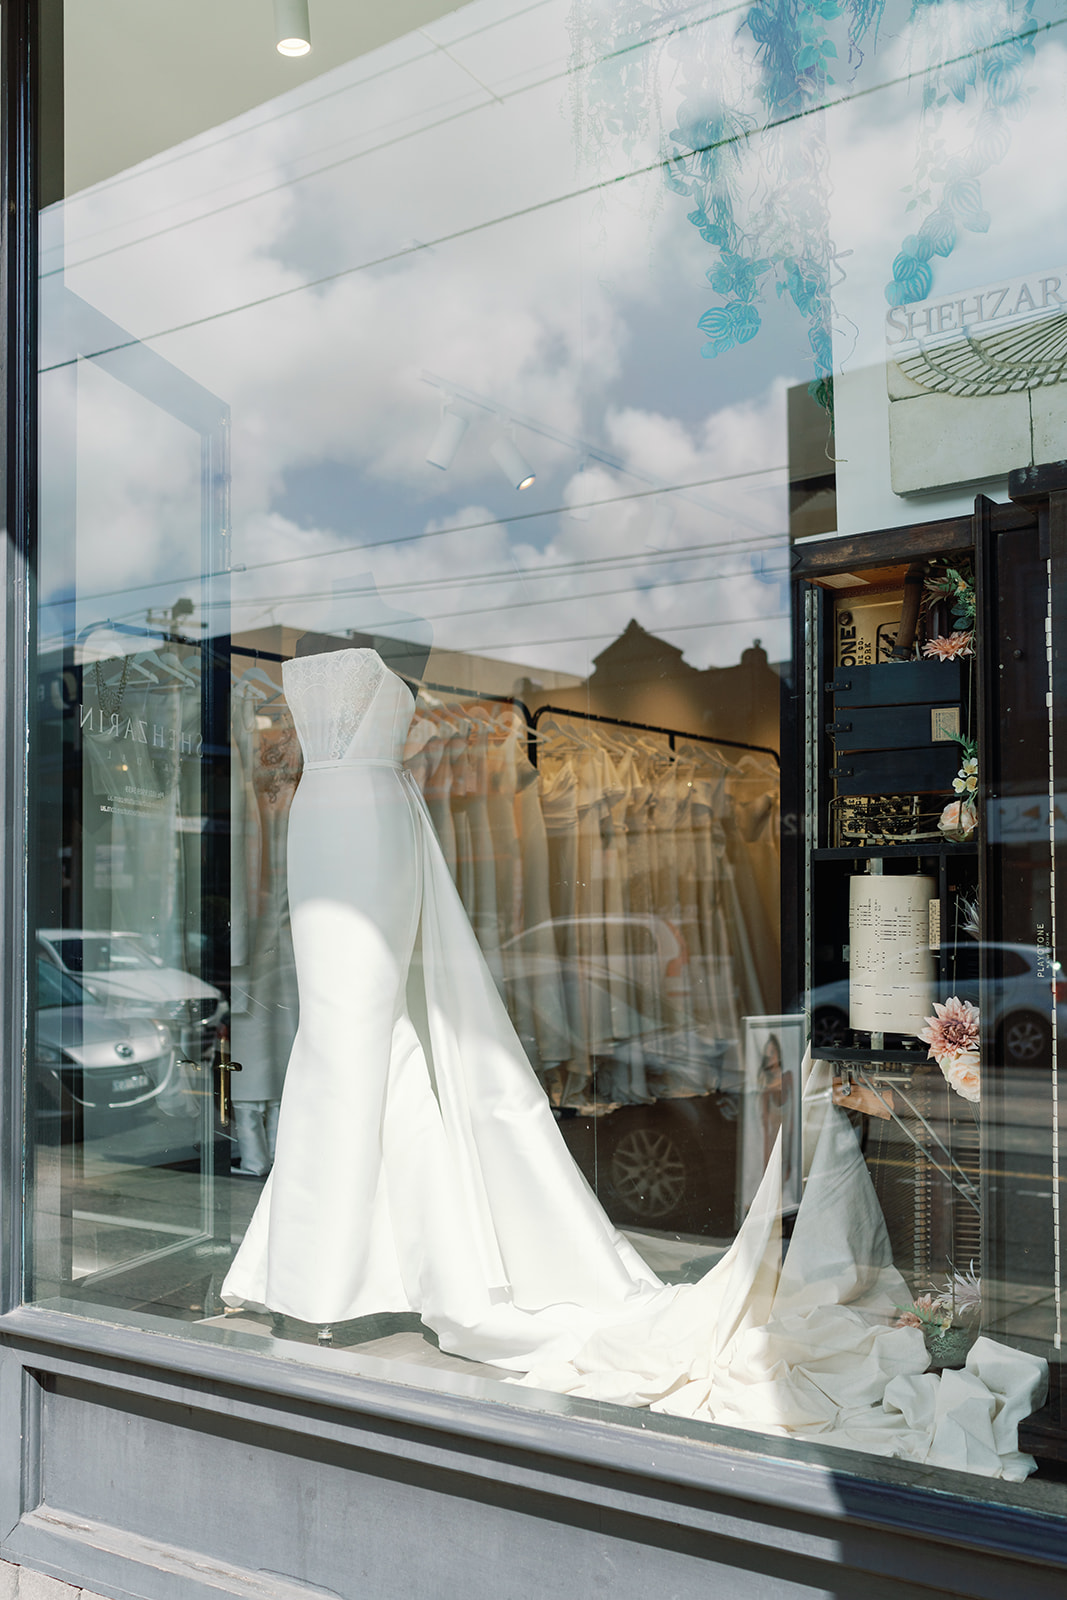 The shopfront of wedding dress designer, Shehzarin Batha Couture